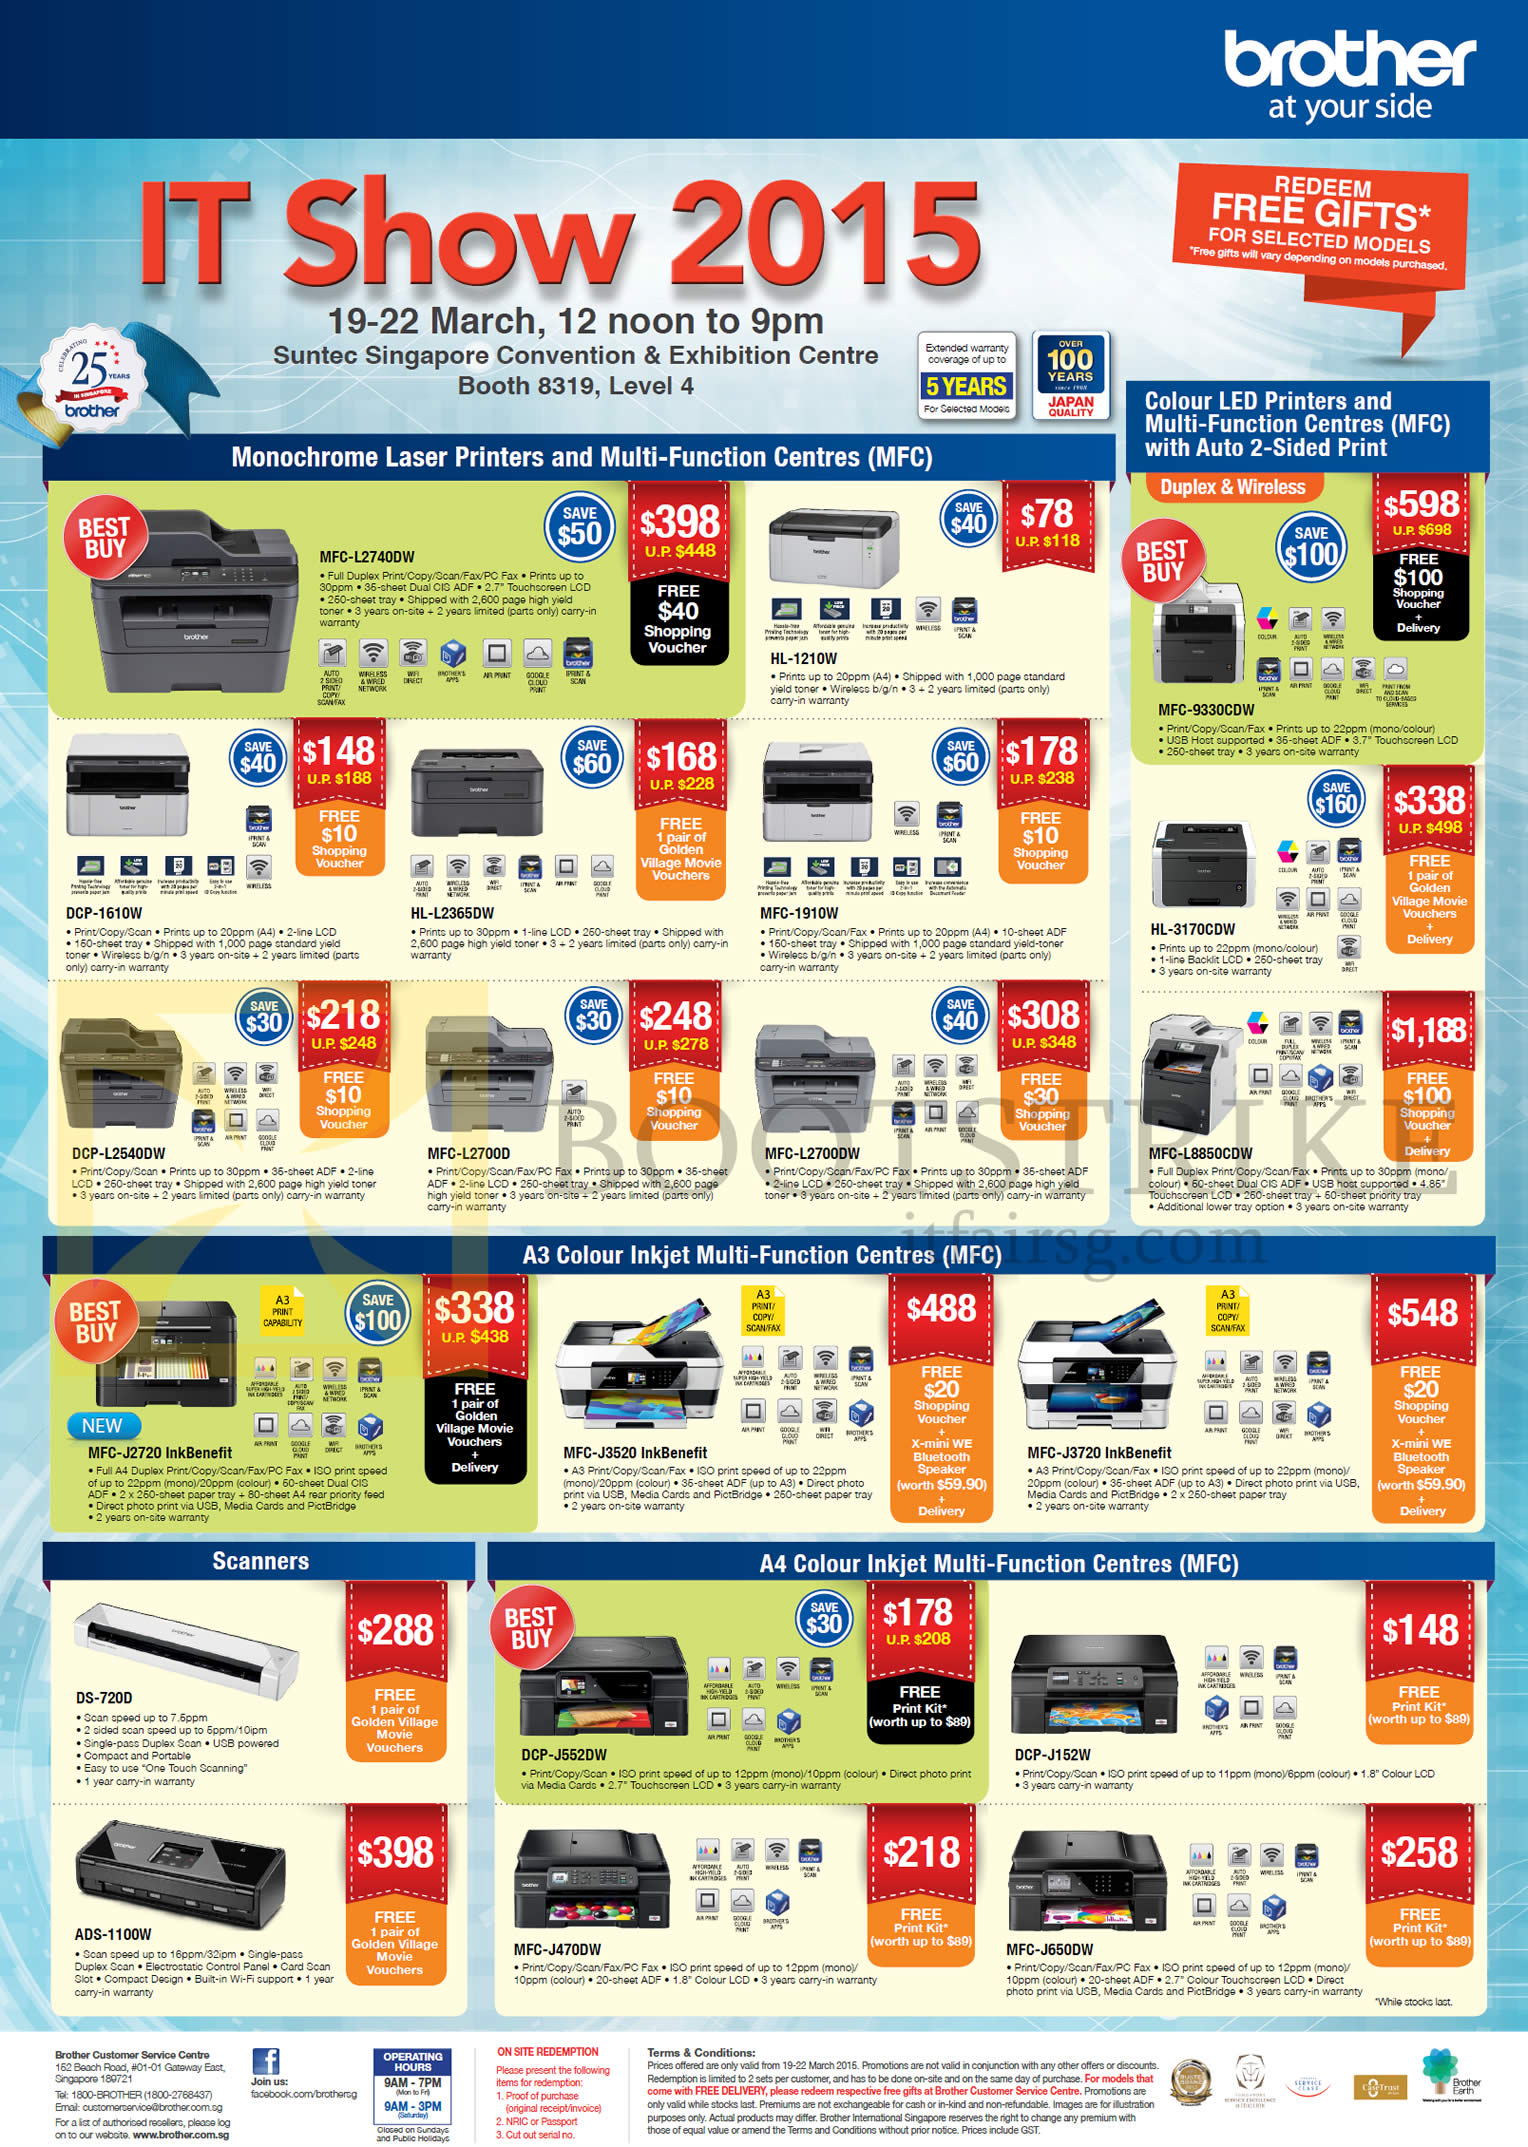 IT SHOW 2015 price list image brochure of Brother Printers Inkjet Laser, Scanners, MFC-L2740DW, 9330CDW, 1910W, L2700DW, DCP-1610W, L2540DW, HL-3170CDW, L2365DW, DS-720D, ADS-1100W